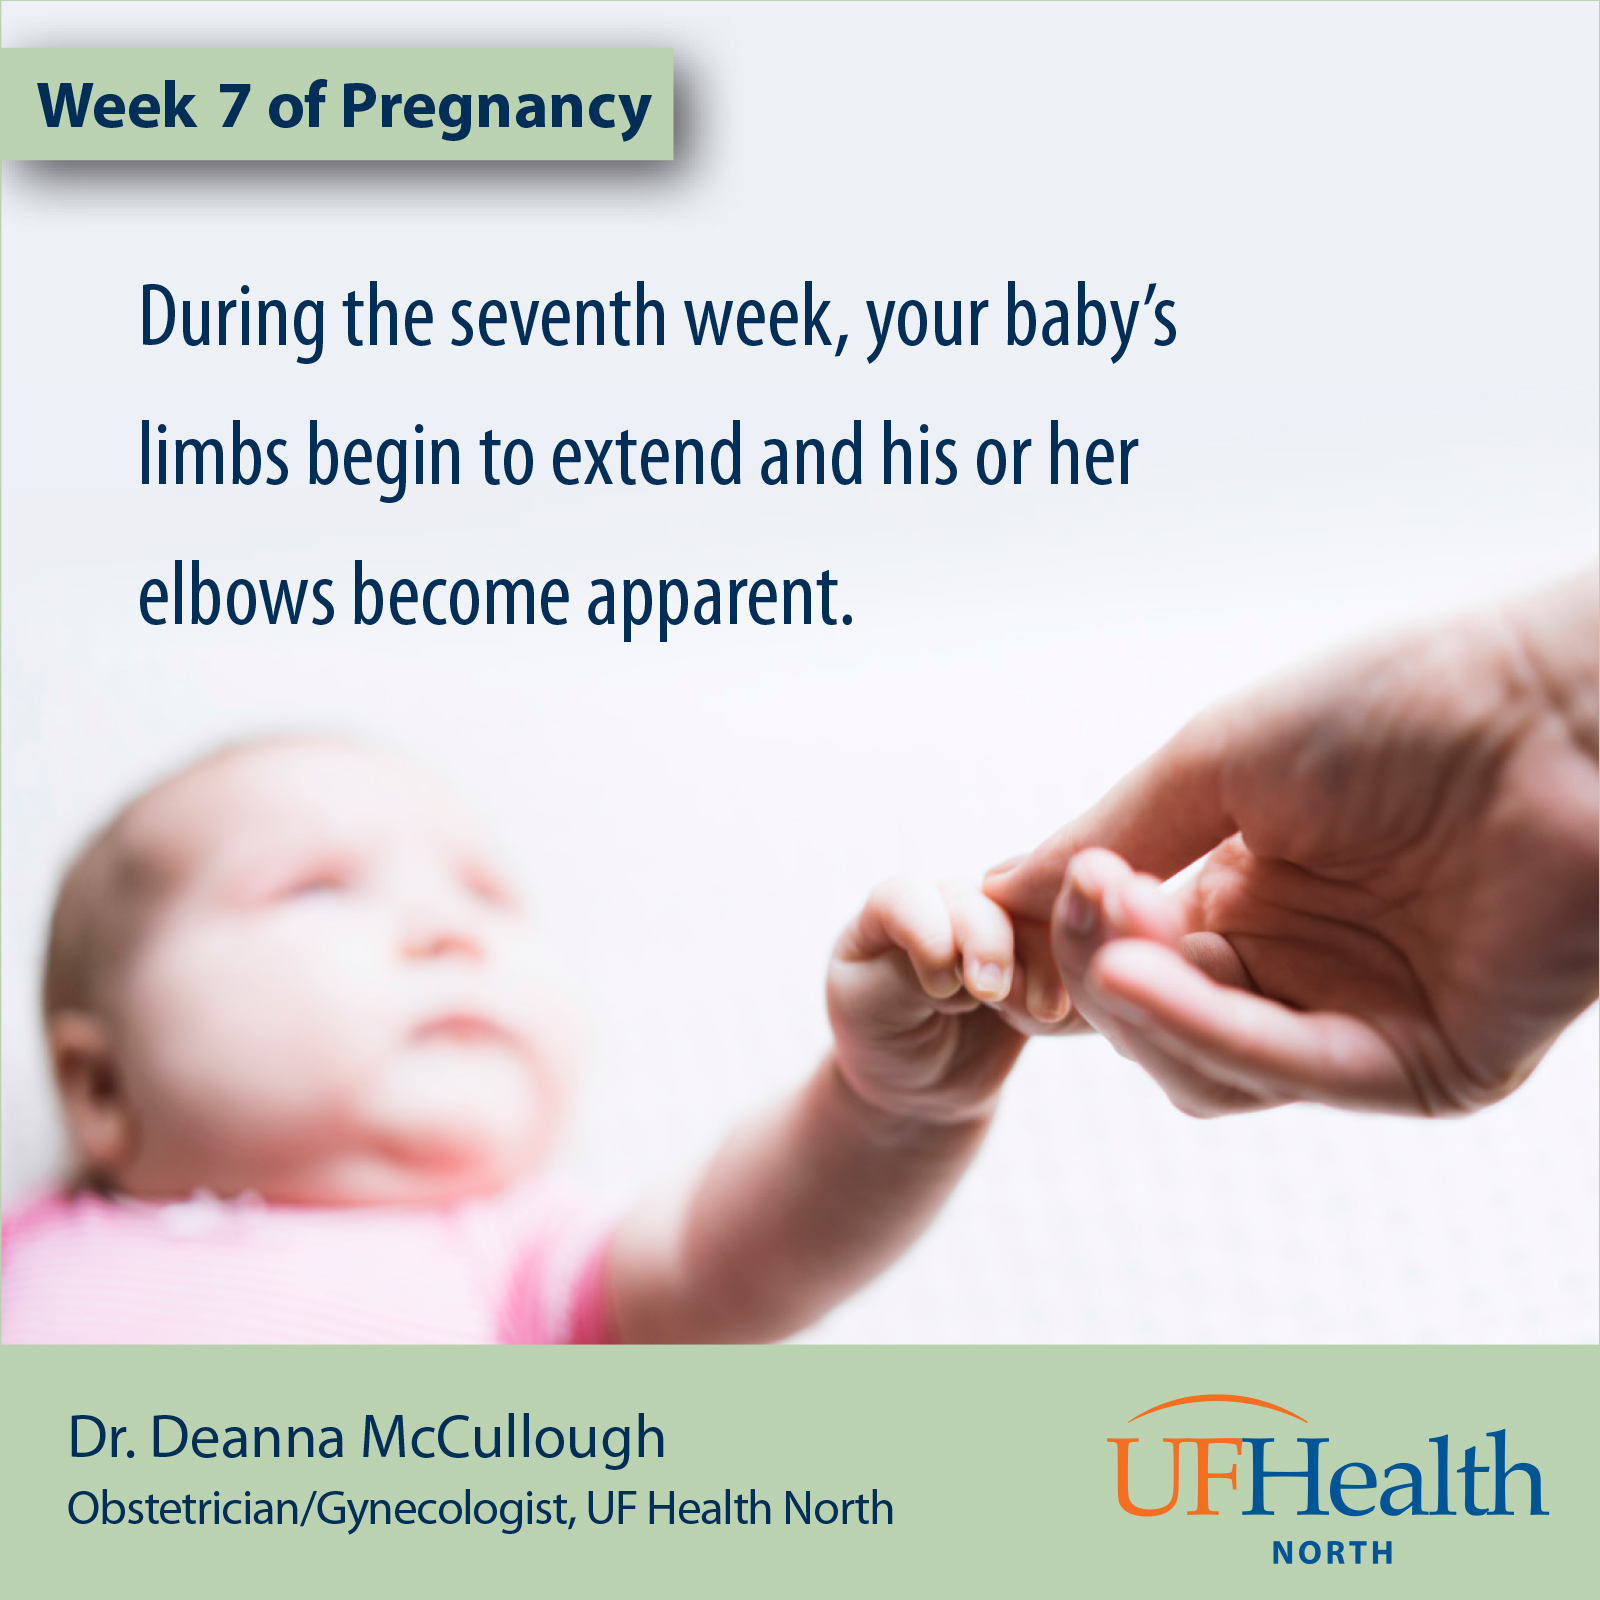 UF Health North pregnancy tip 7